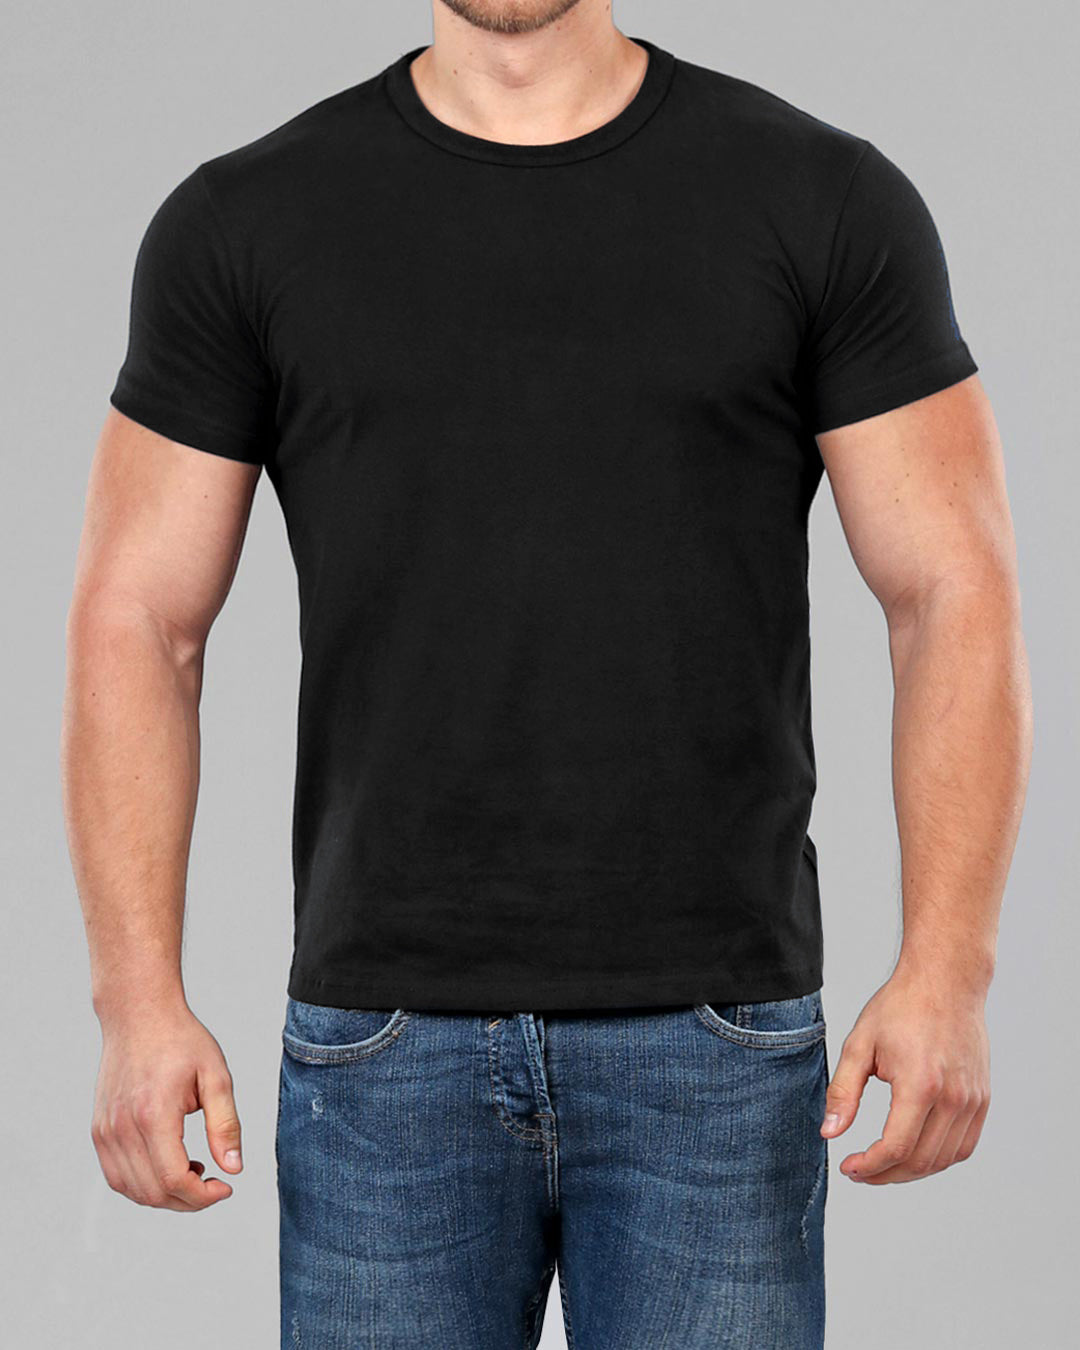 Men's Black Crew Neck Fitted Plain T-Shirt | Muscle Fit Basics